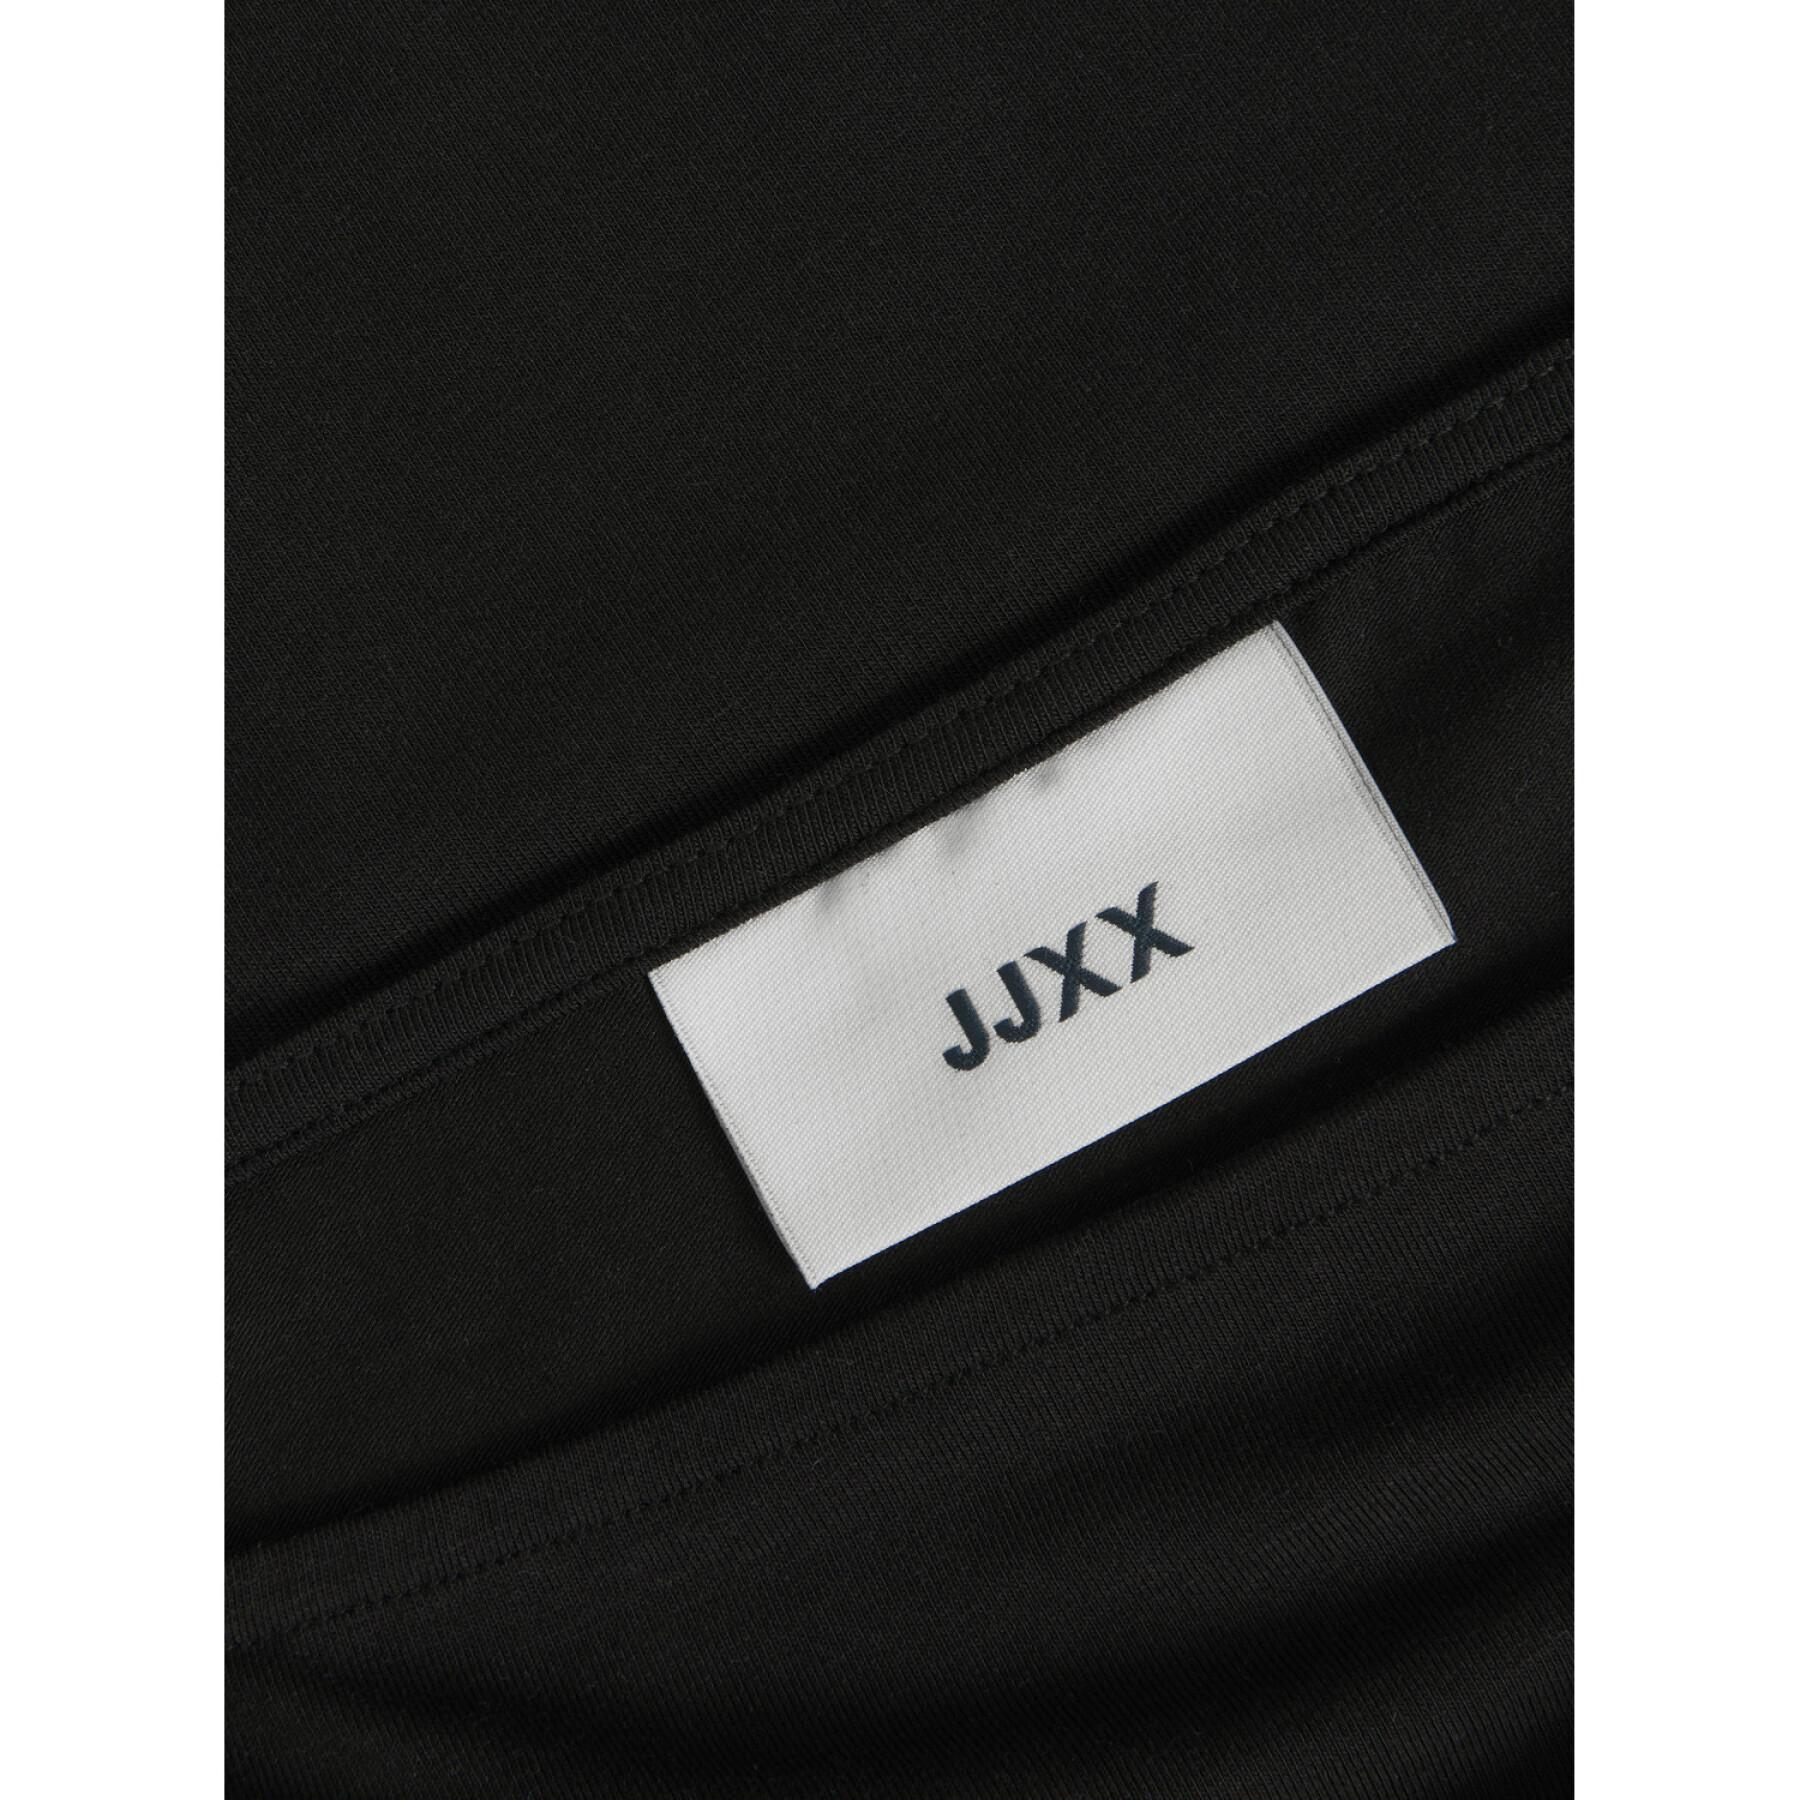 Body maglia donna Jack & Jones Ivy STR Dream